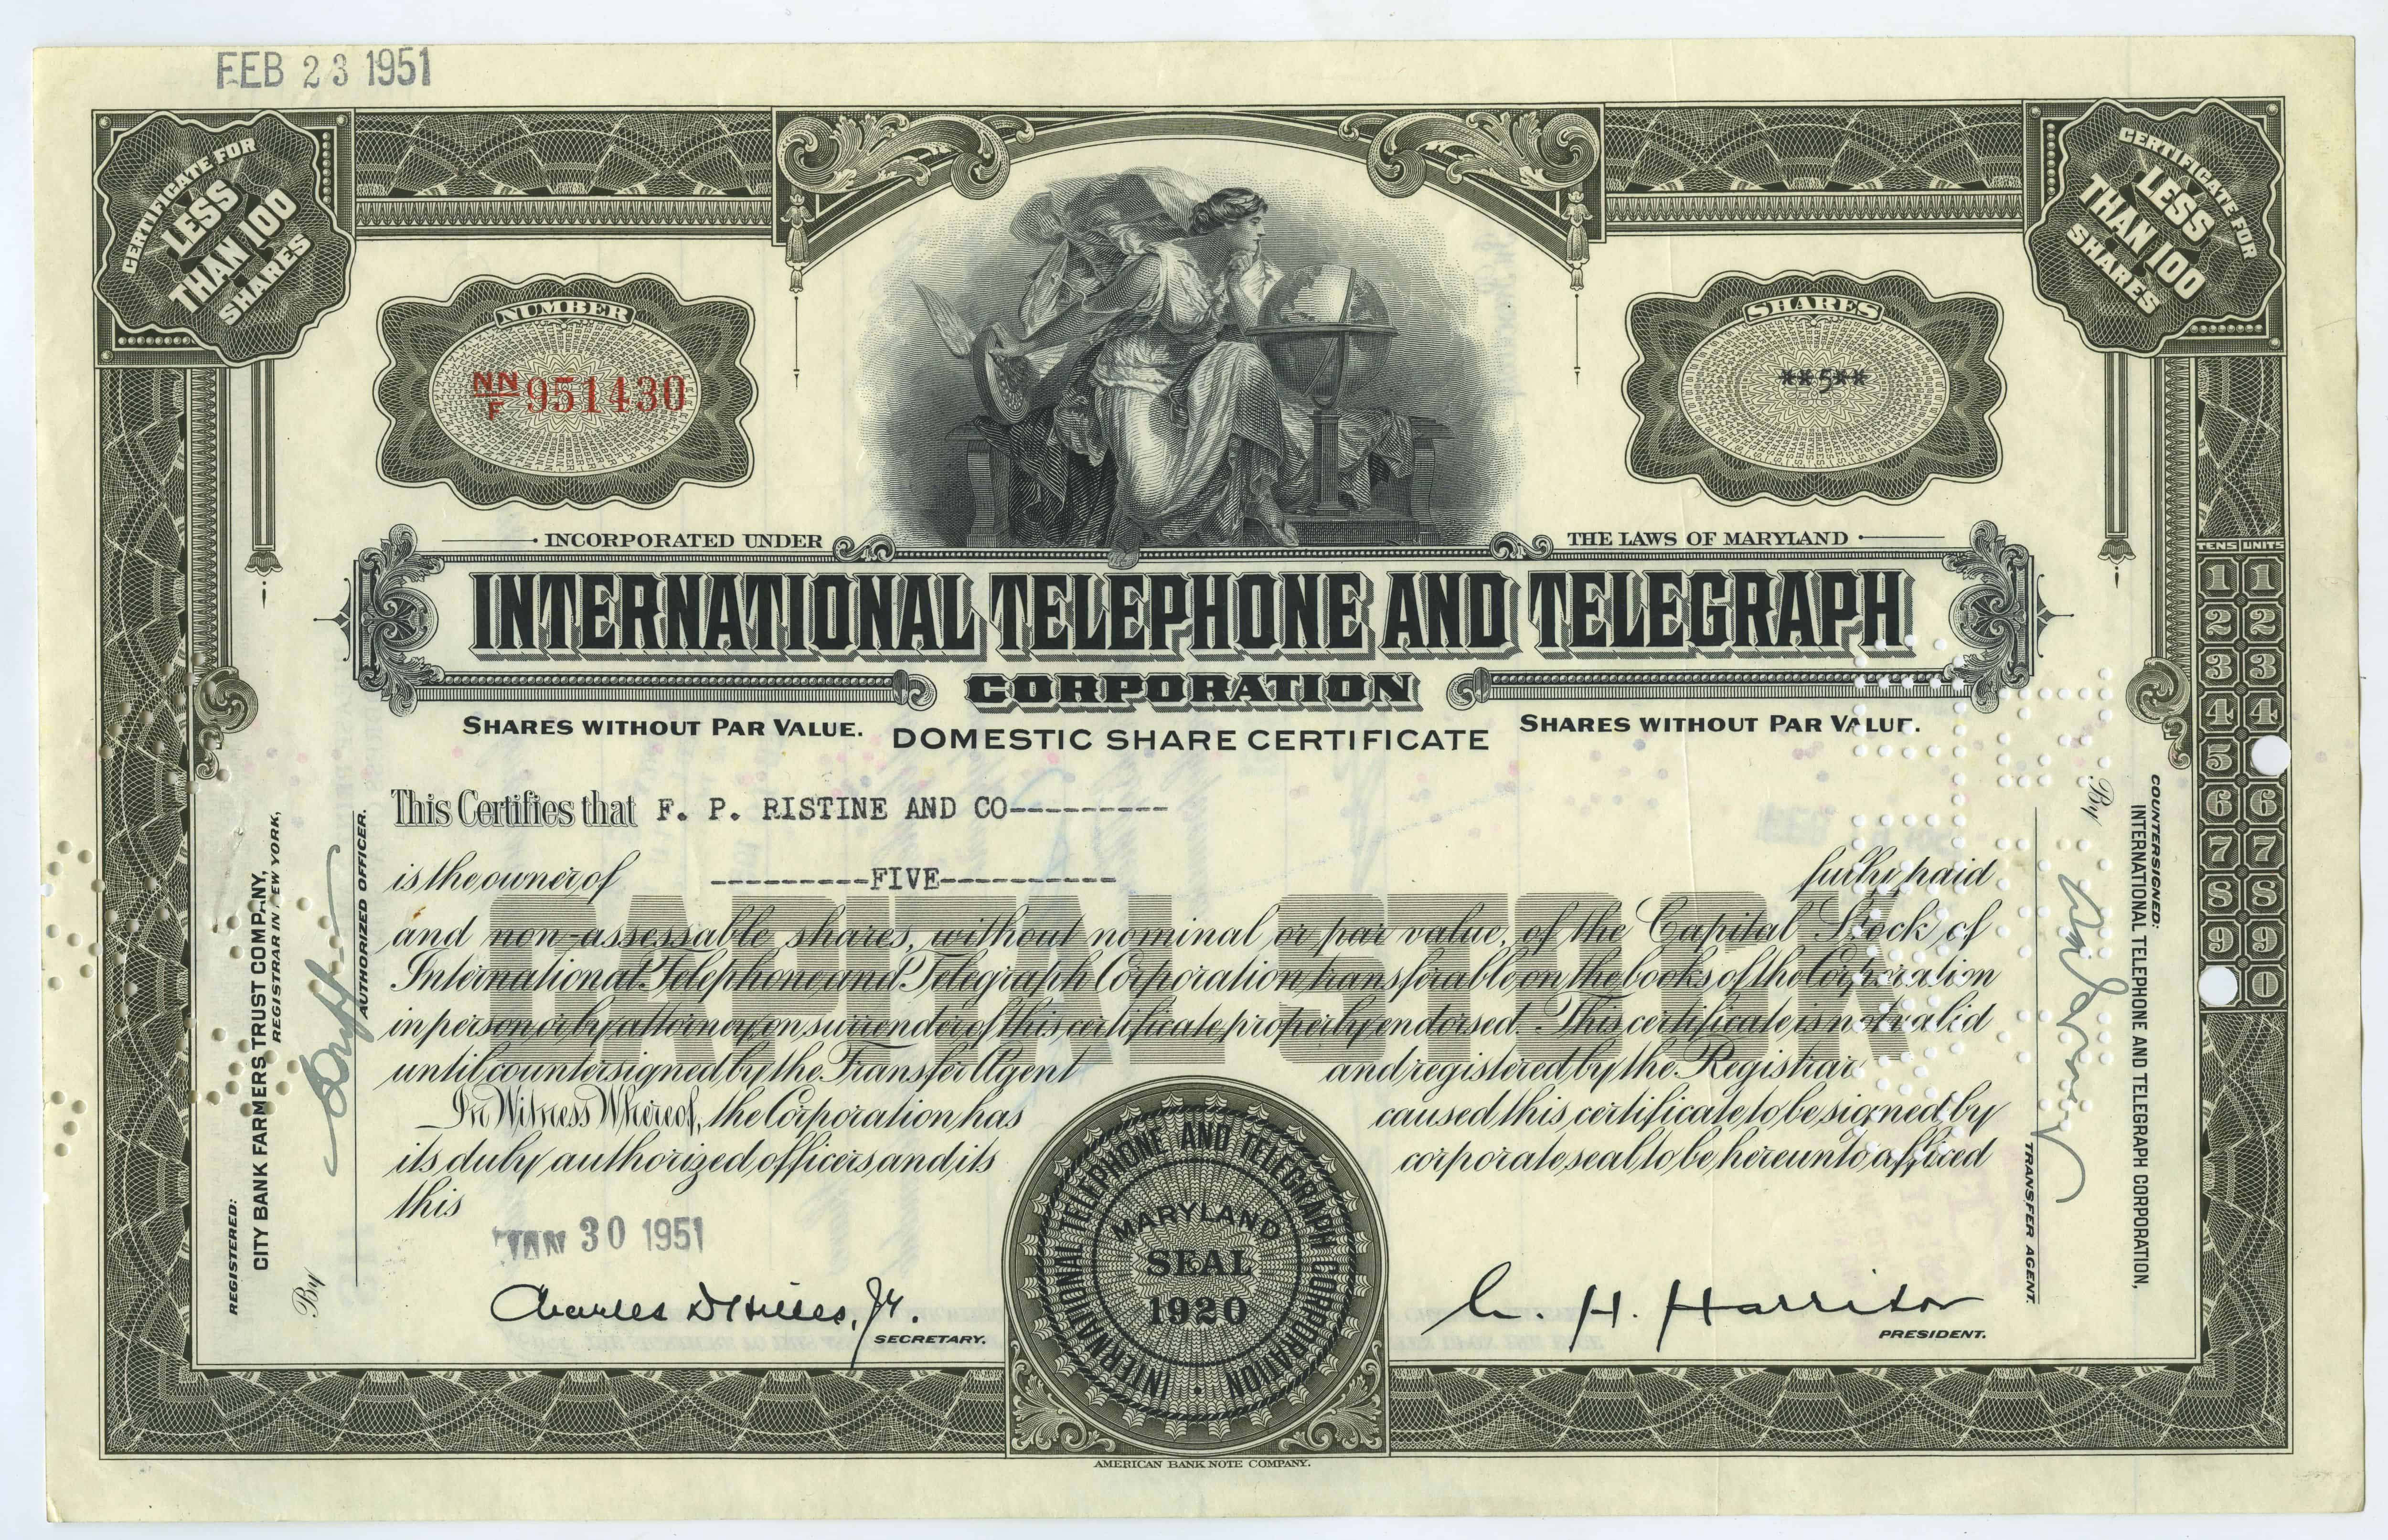 5 akcji spółki International Telephone and Telegraph Corporation z 30 stycznia 1951 roku